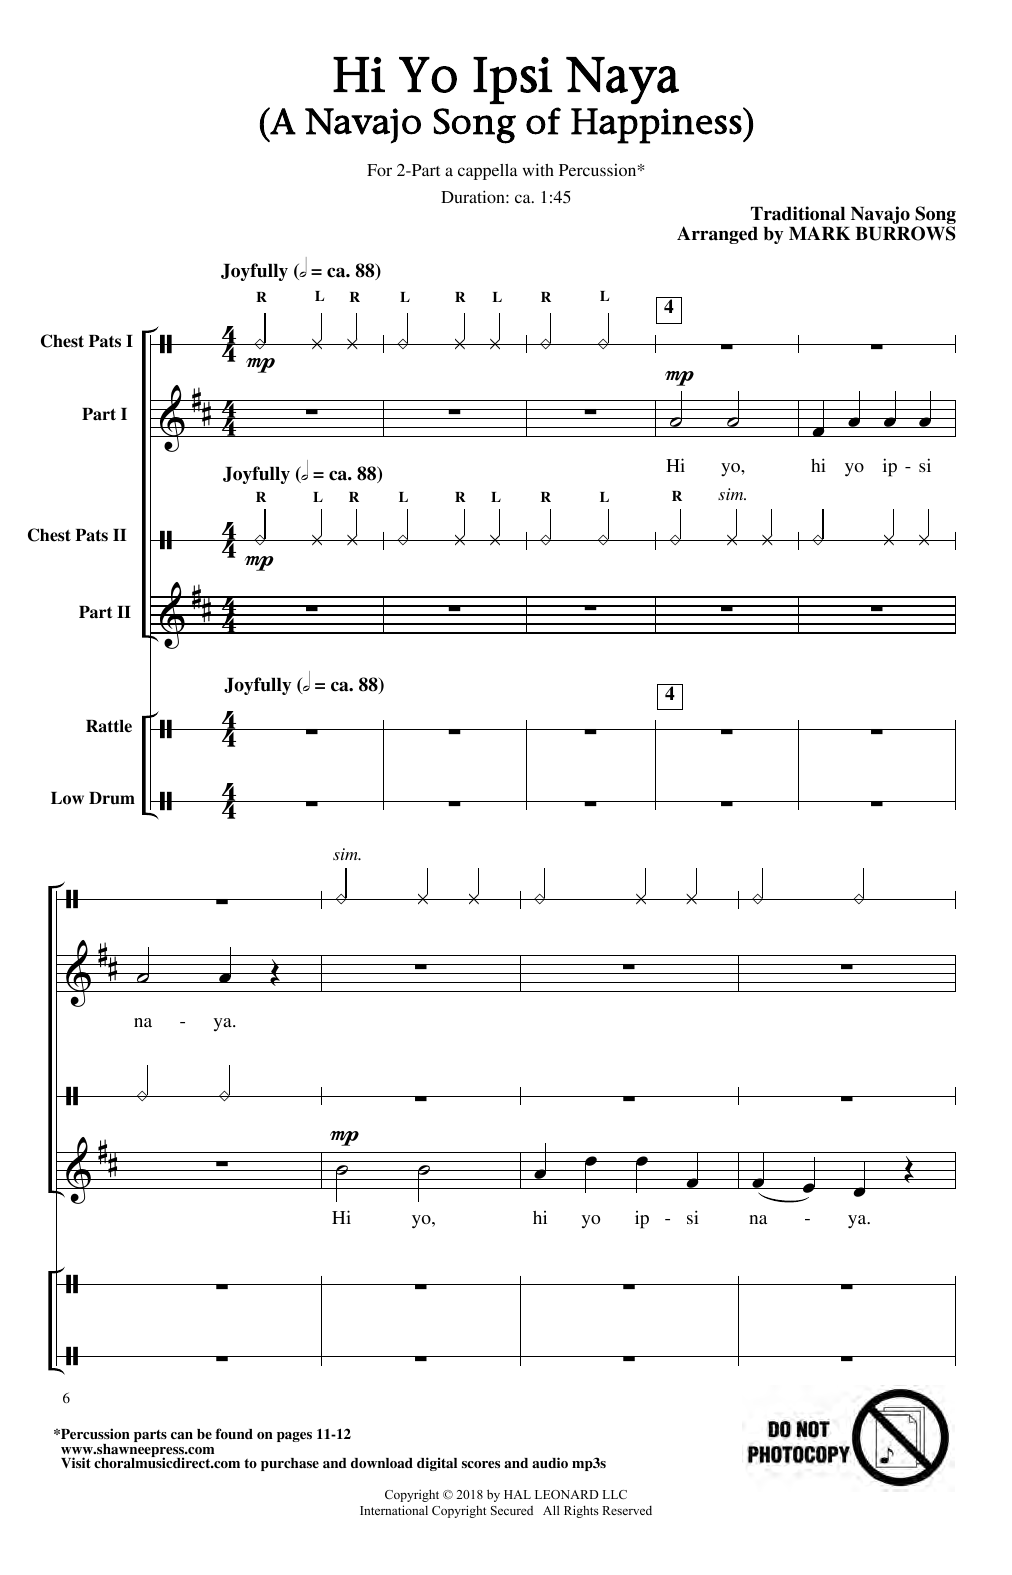 Traditional Navajo Song Hi Yo Ipsi Naya (arr. Mark Burrows) Sheet Music Notes & Chords for 2-Part Choir - Download or Print PDF